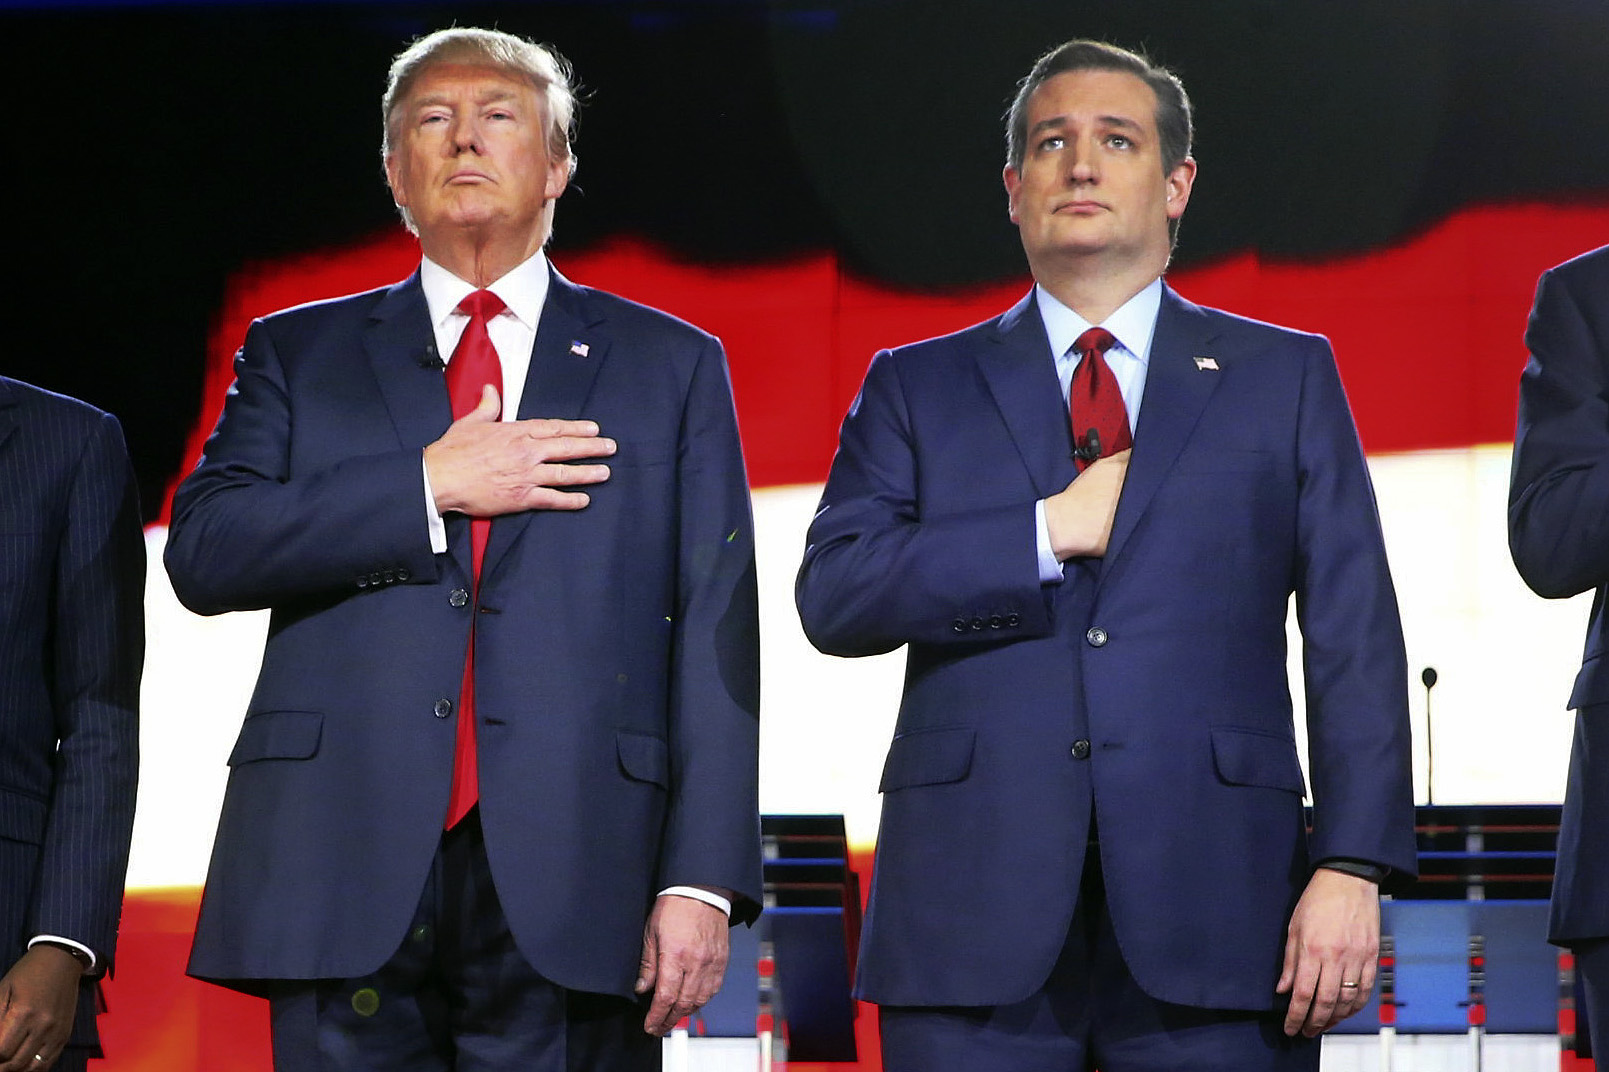 Republican presidential candidates Donald Trump and Texas Sen. Ted Cruz stand during a Republican presidential debate in Las Vegas in December. (Ruth Fremson—Press Pool)